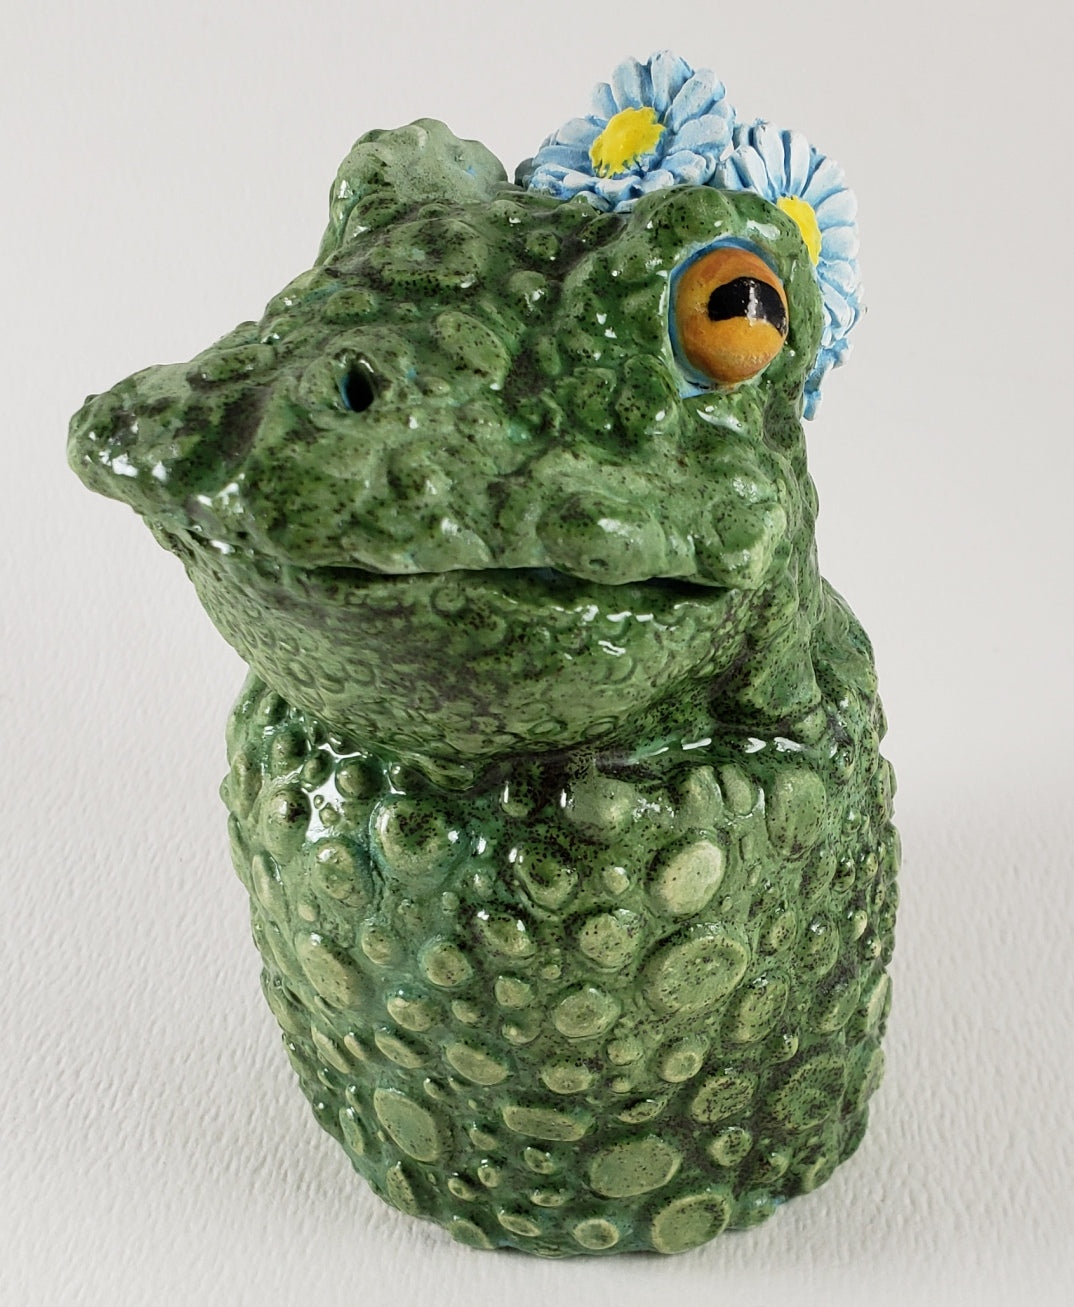 Frida the Frog Wears a Daisy Headband - Artworks by Karen Fincannon